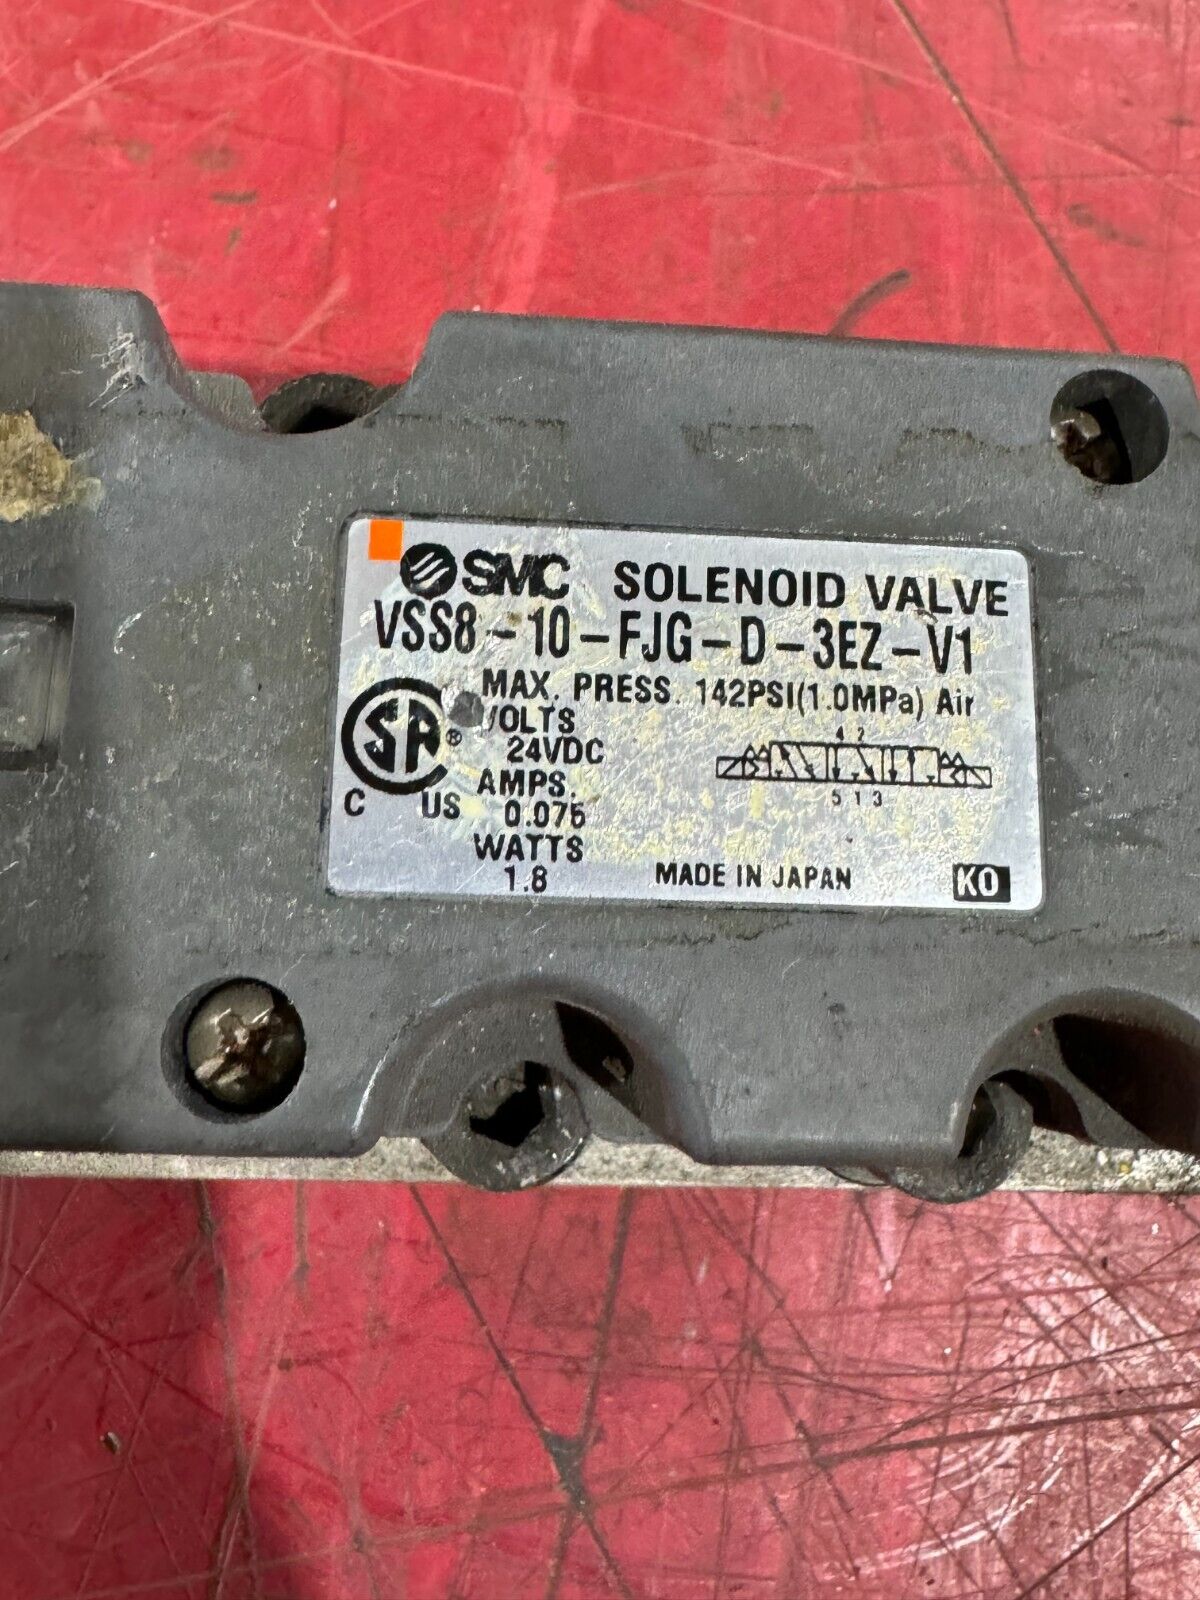 USED SMC SOLENOID VALVE VSS8-10-FJG-D-3EZ-V1